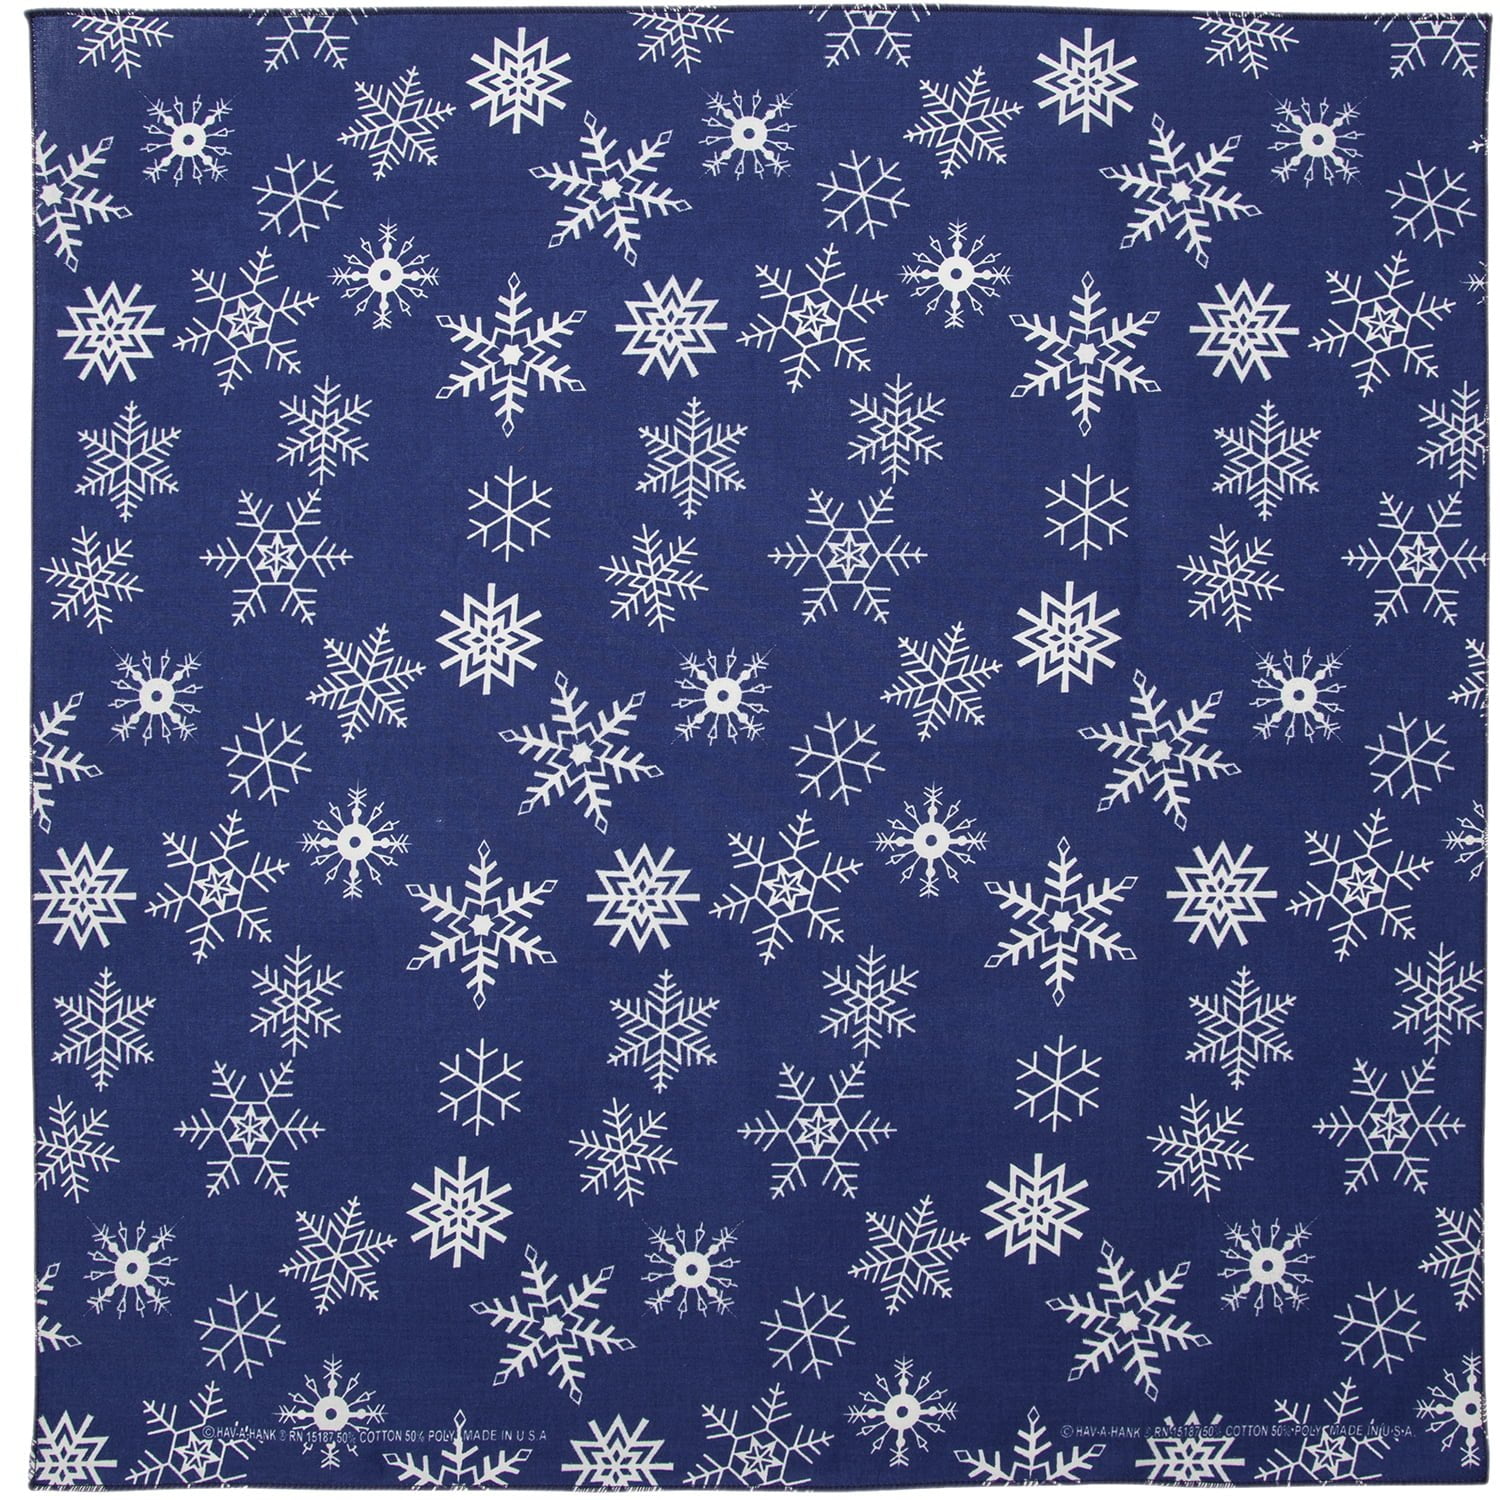 12-pack Glitter Snowflake Bandanas, by the Dozen - - 22x22